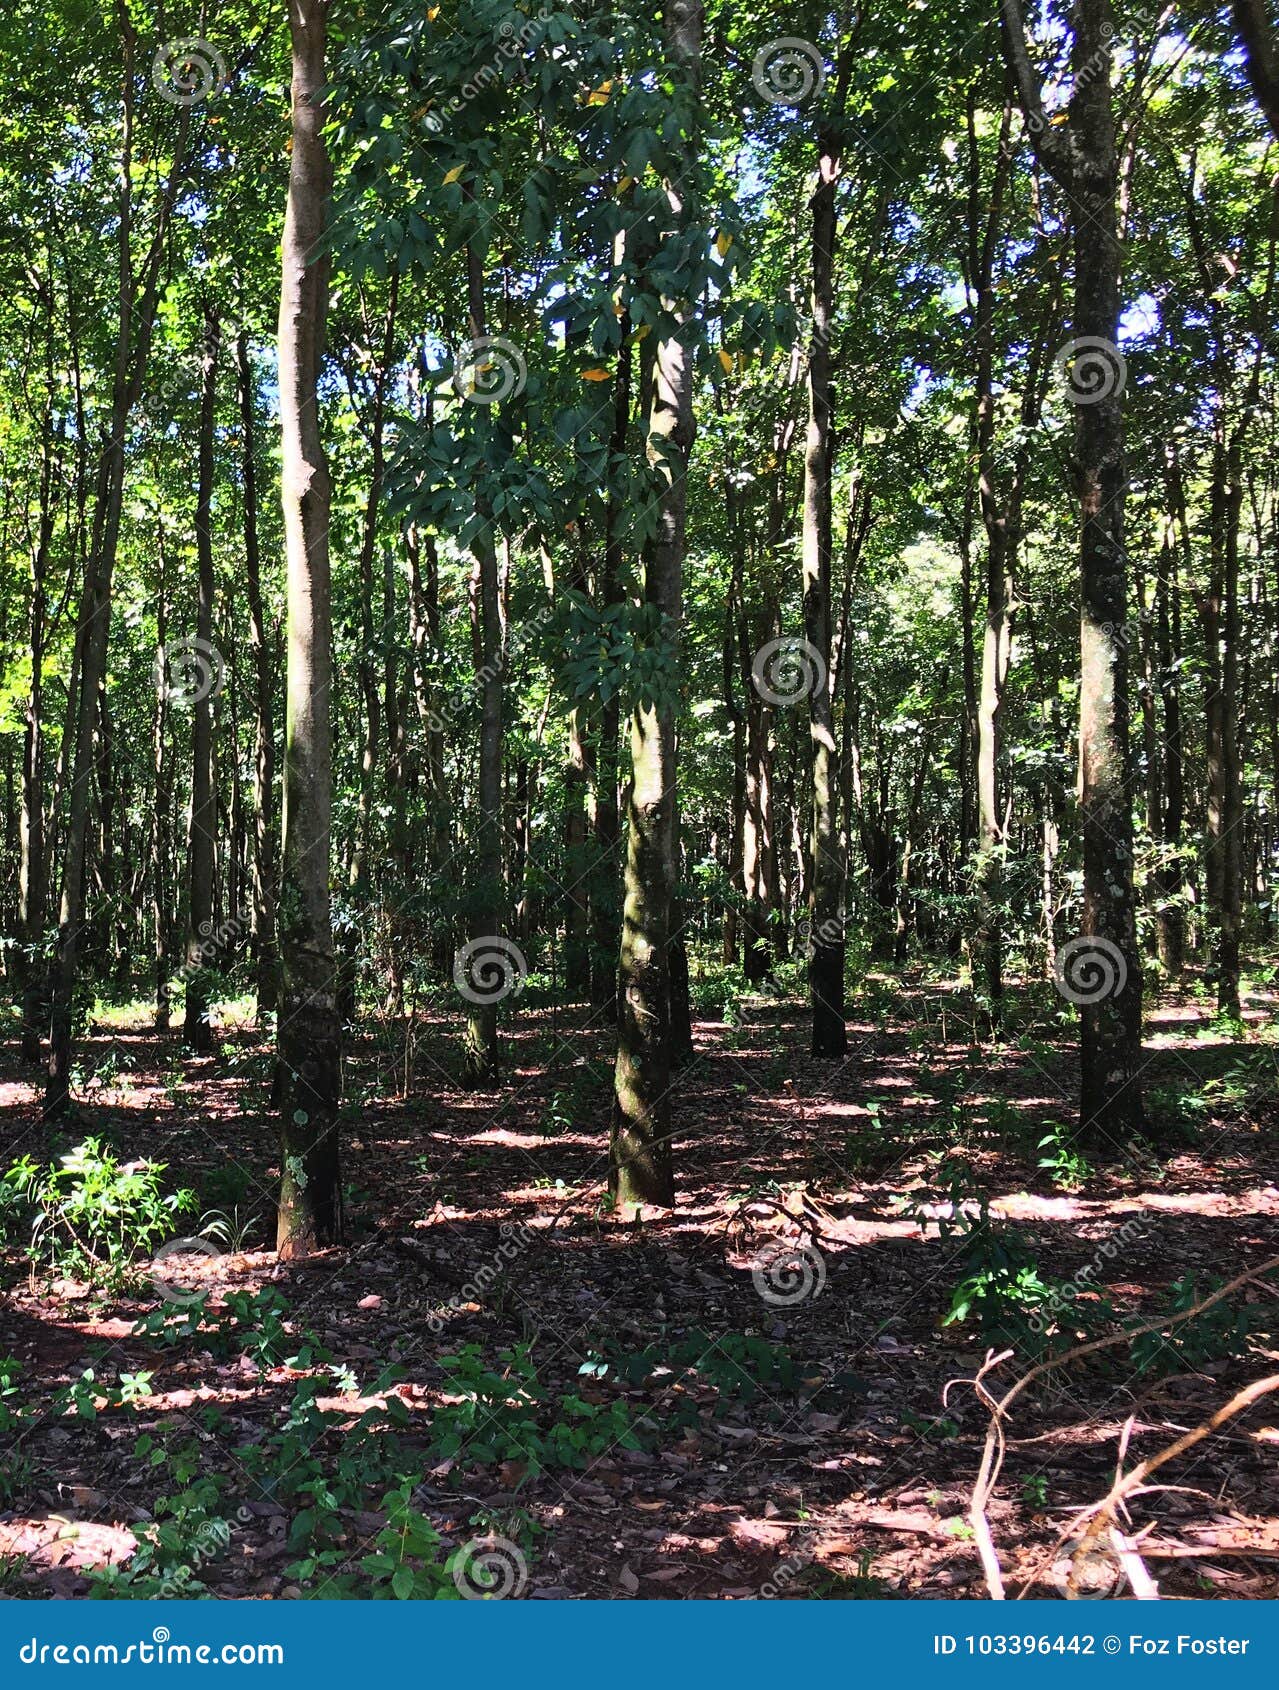 rubber tree plantation, fazenda, sao paulo stare brazil